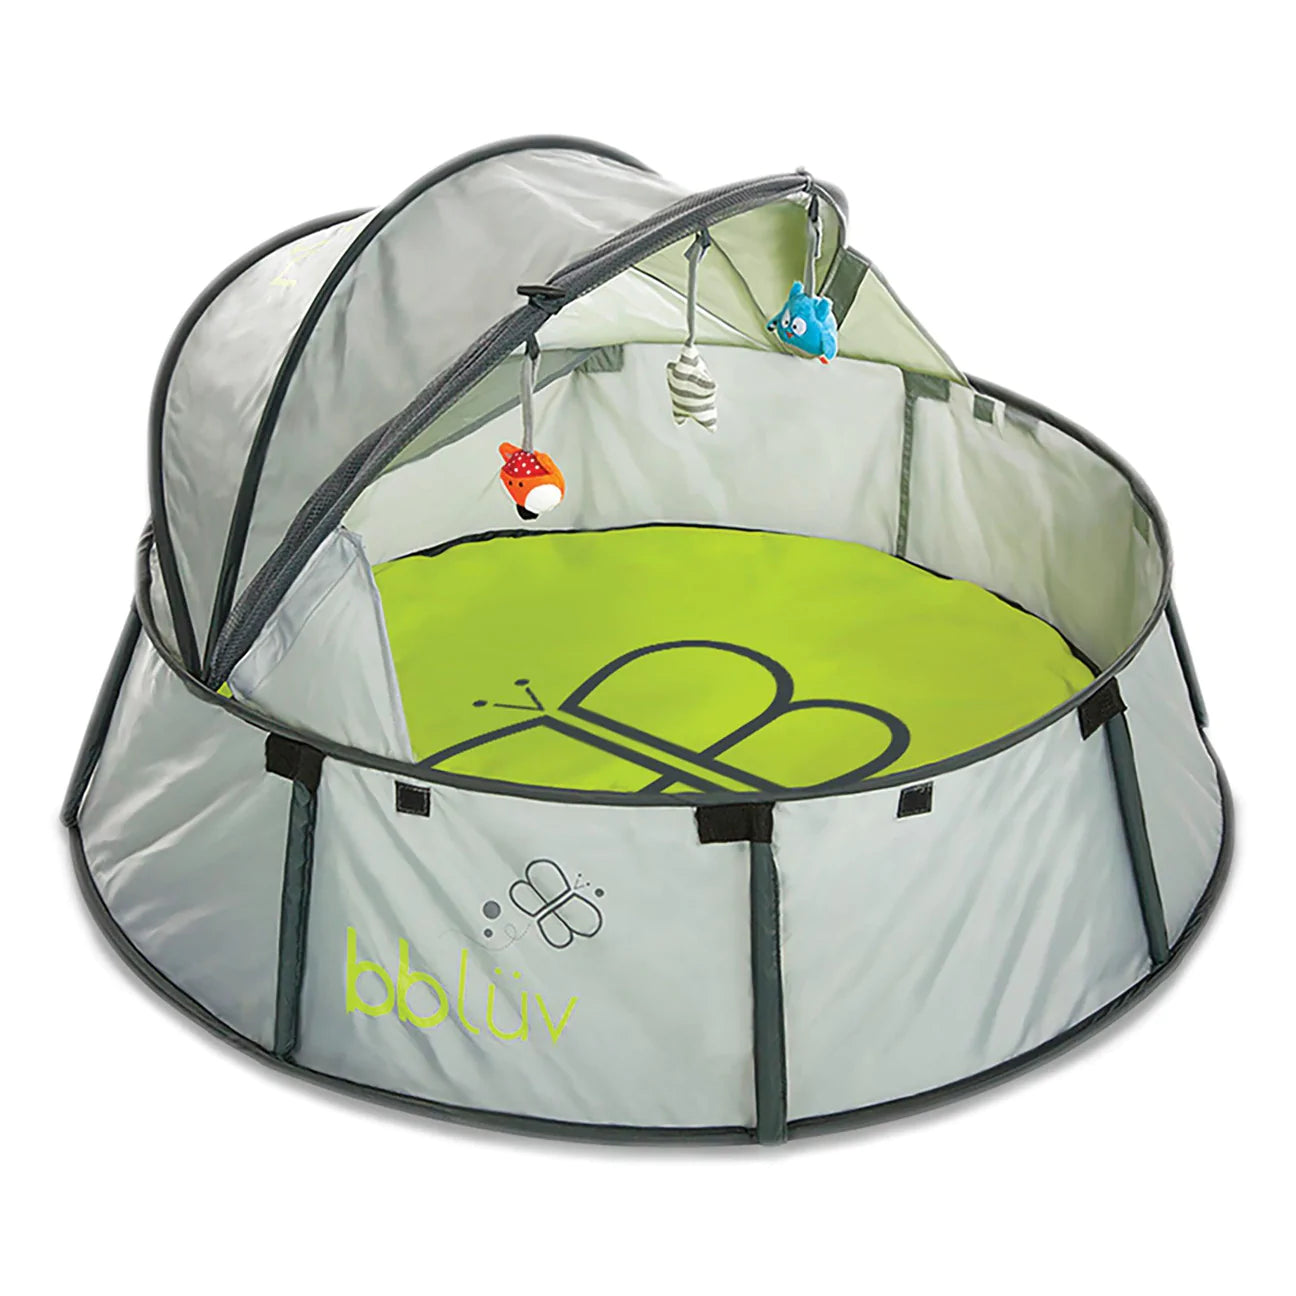 Nidö: 2 in 1 Travel & Play Tent